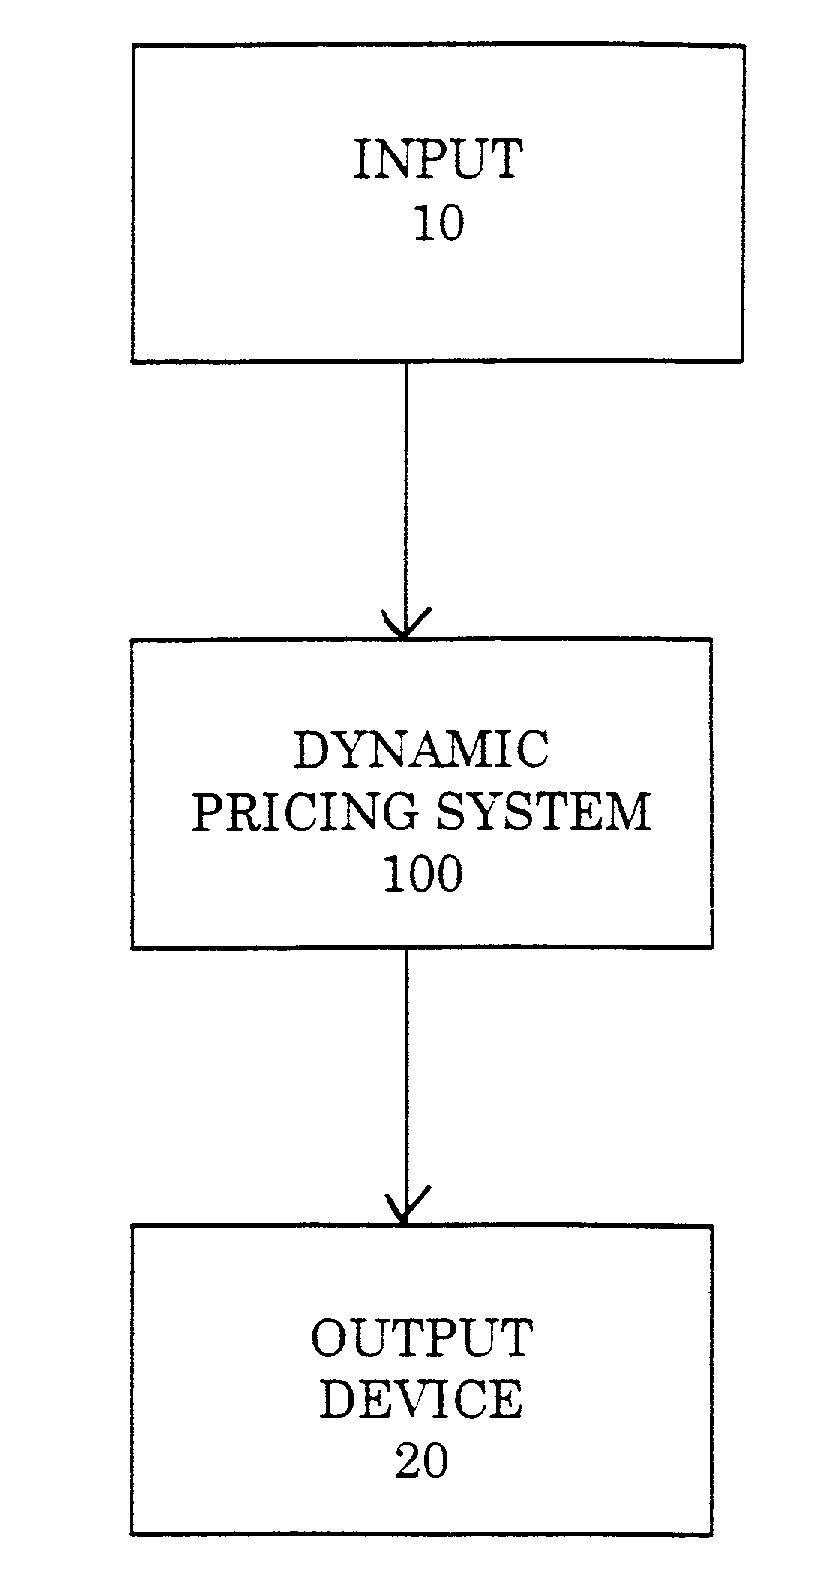 Dynamic pricing system